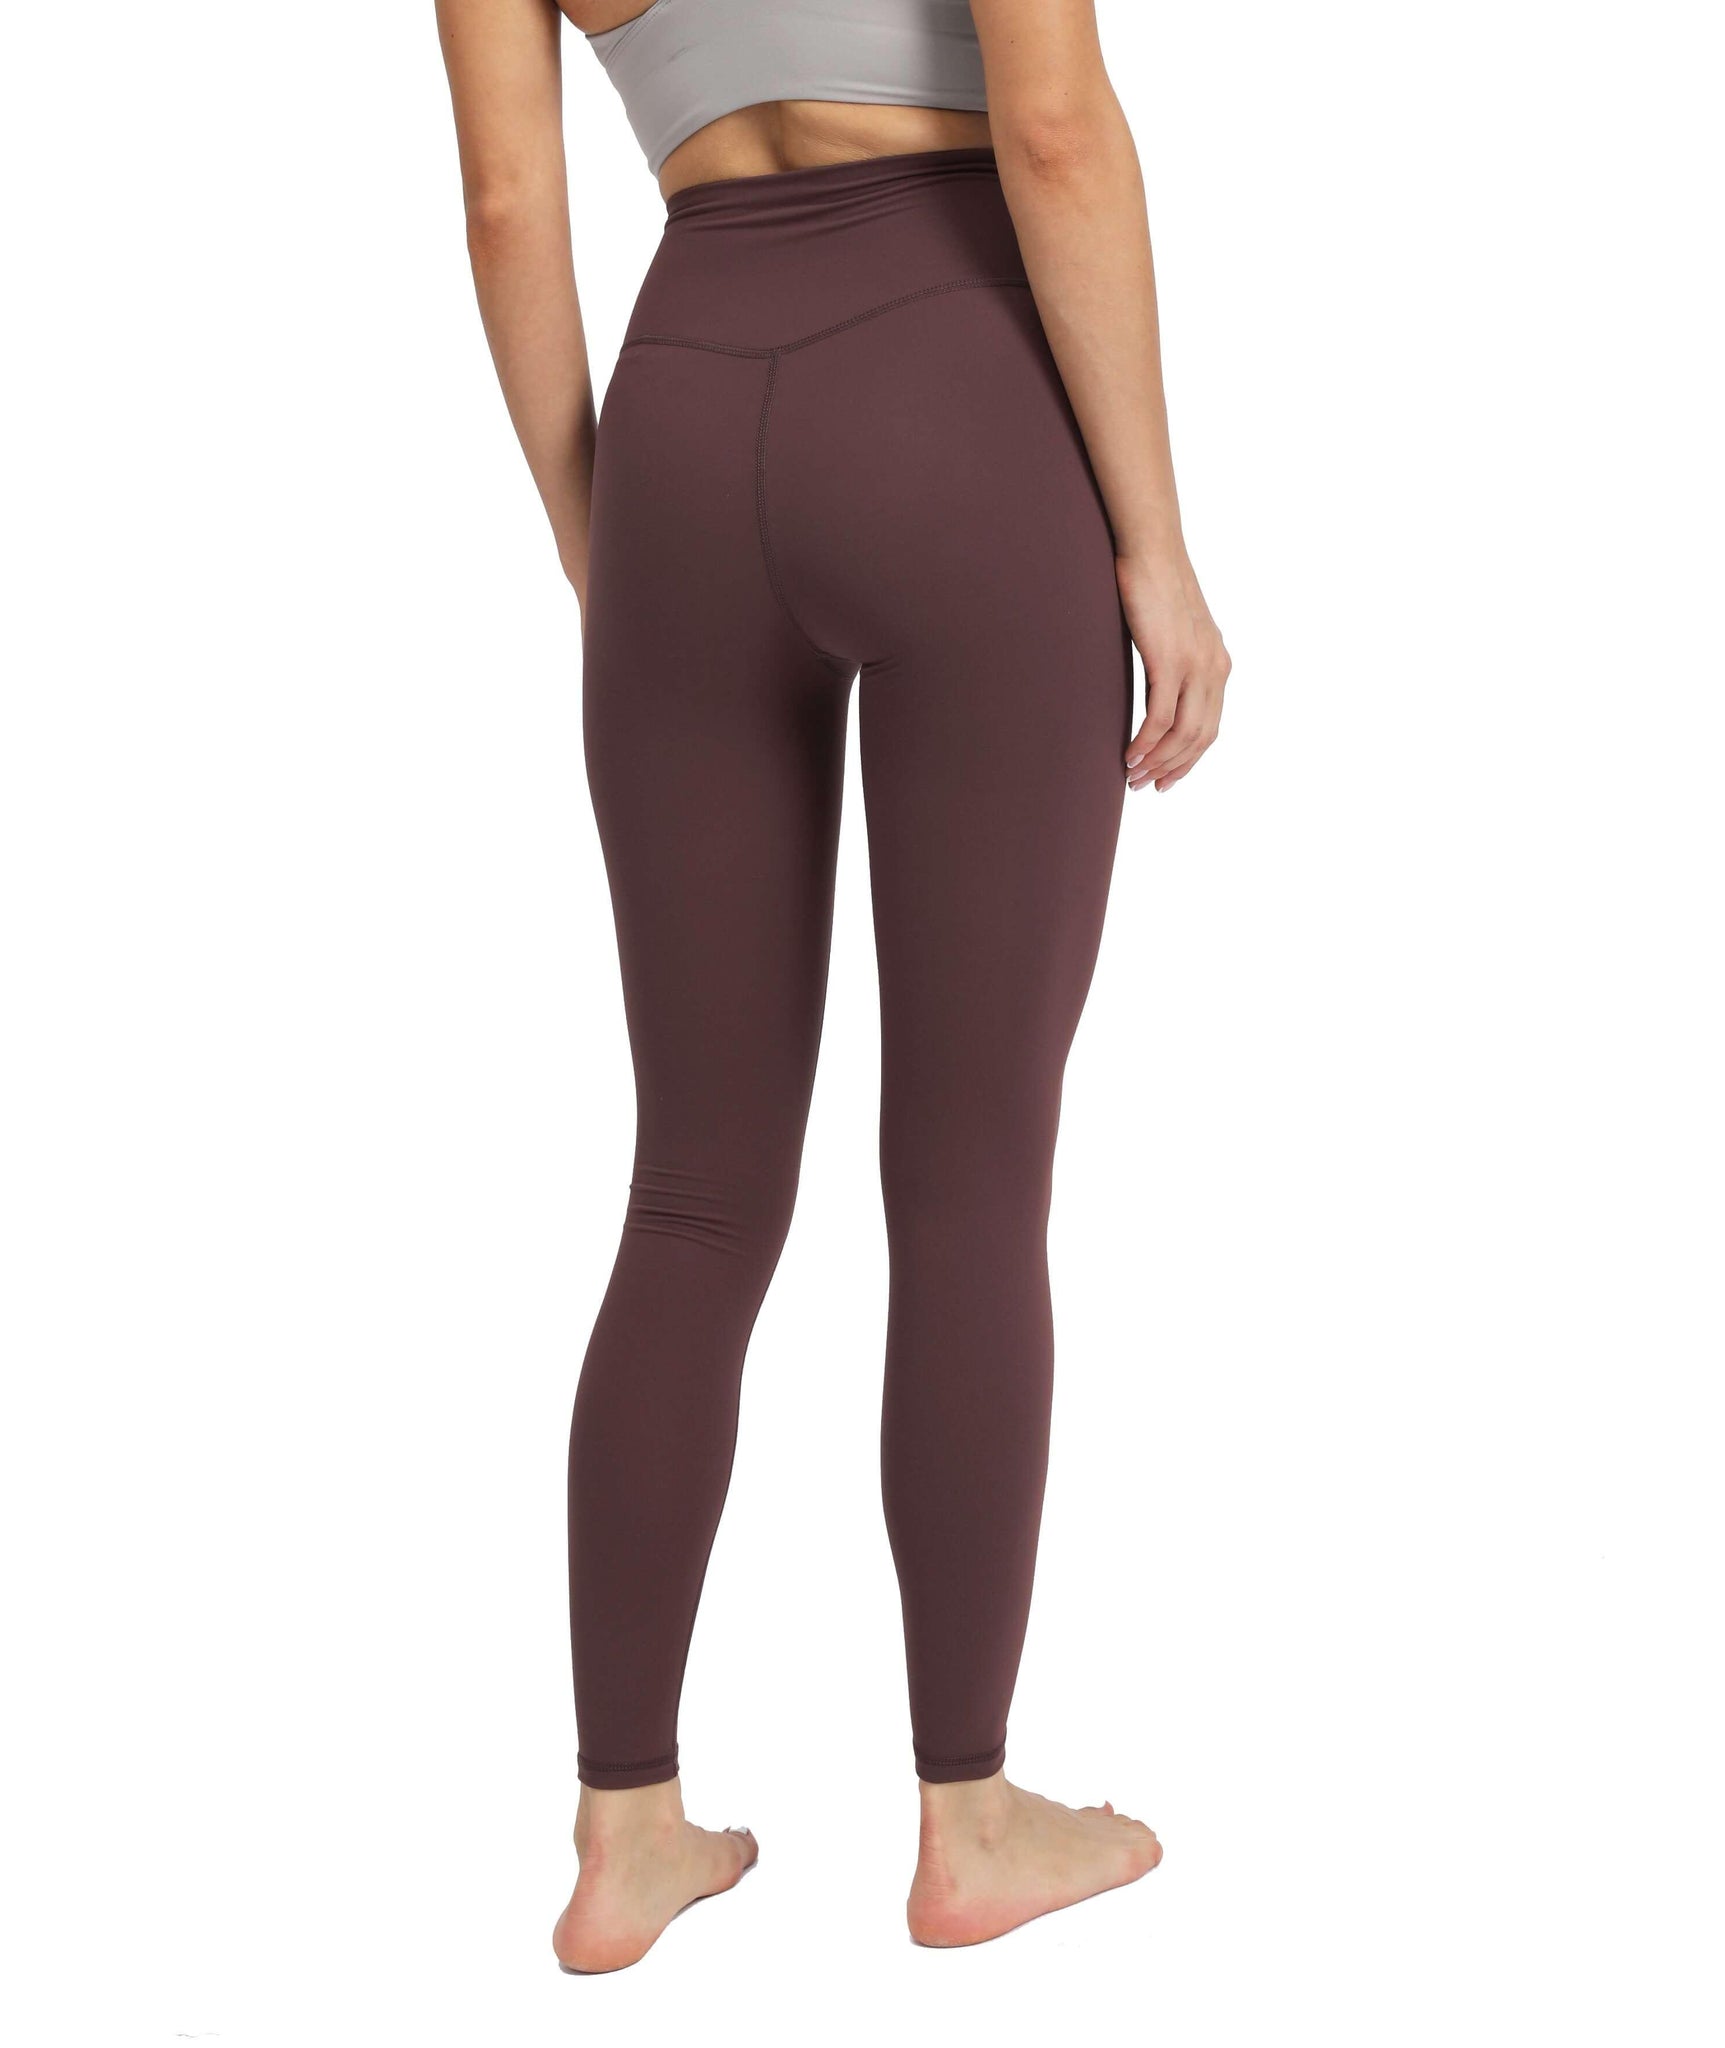 Nepoagym INSPIRE 25 No Camel Toe Lightweight Women Yoga Leggings Buttery  Soft Medium Rise Slimming Leggings Workout Pants Gym Mineral Purple S